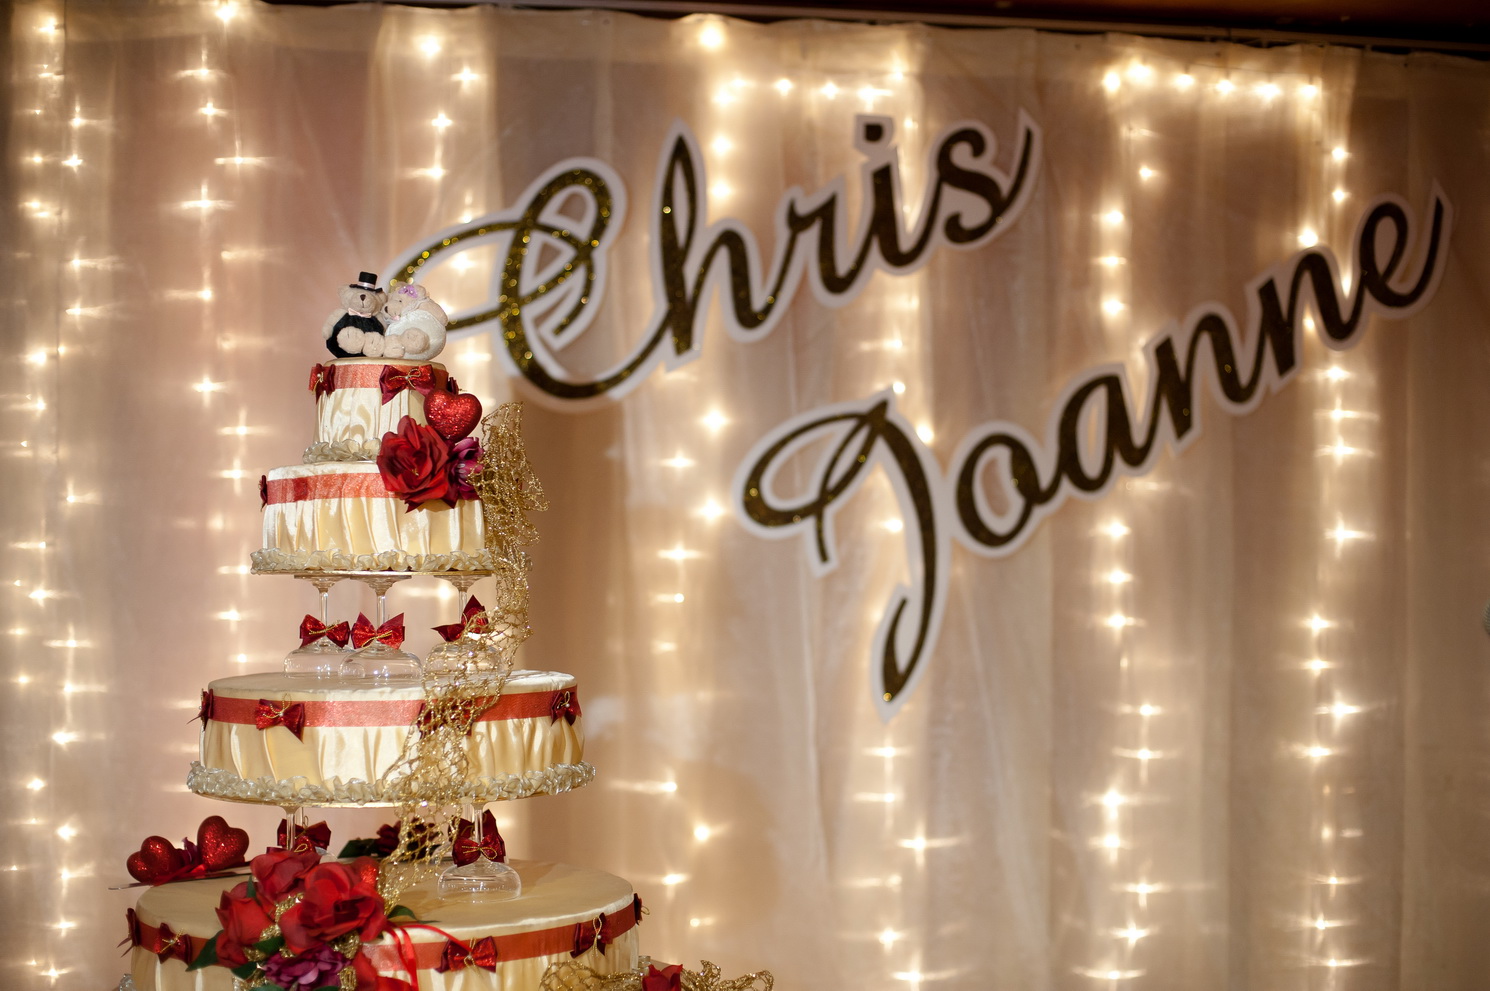 Chris & Joanne ~ Wedding Cakes